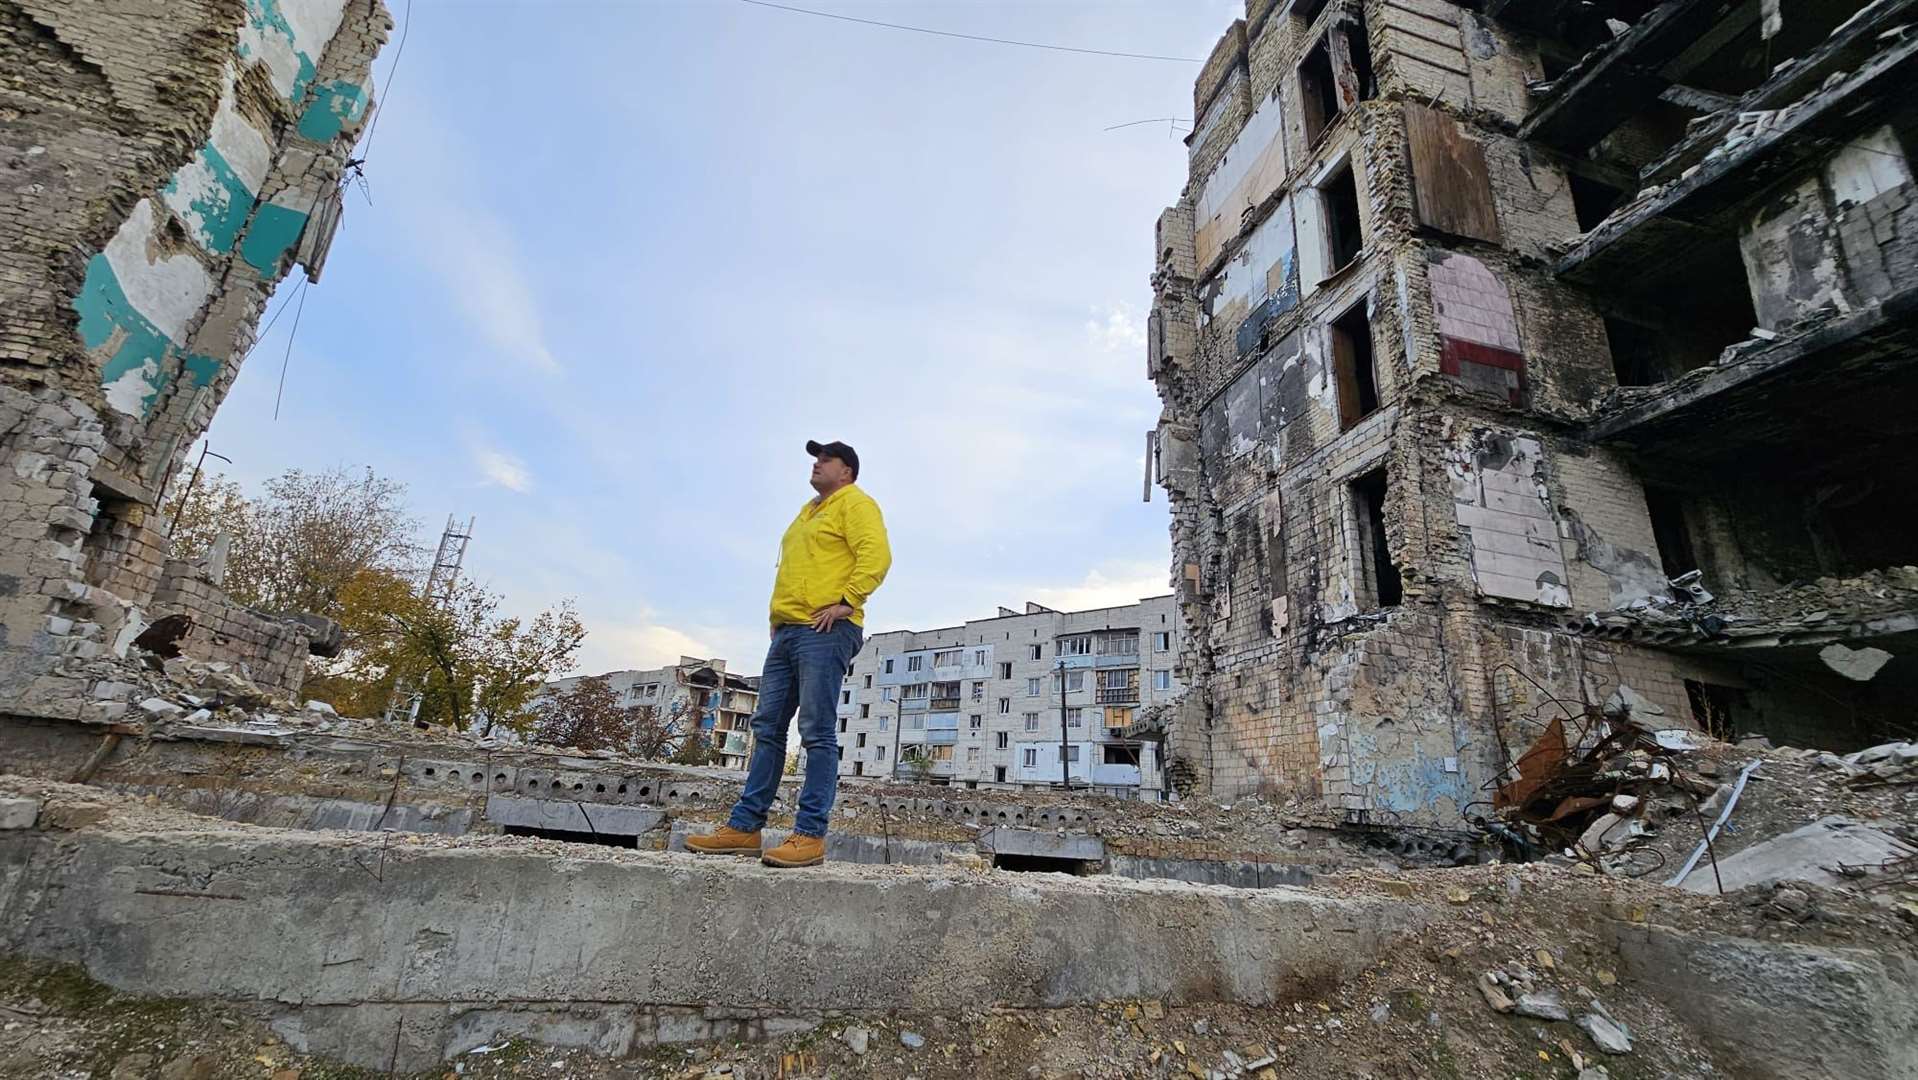 Karol Swiacki visited Bucha to see the devastation caused by bombing (Karol Swiacki/PA)